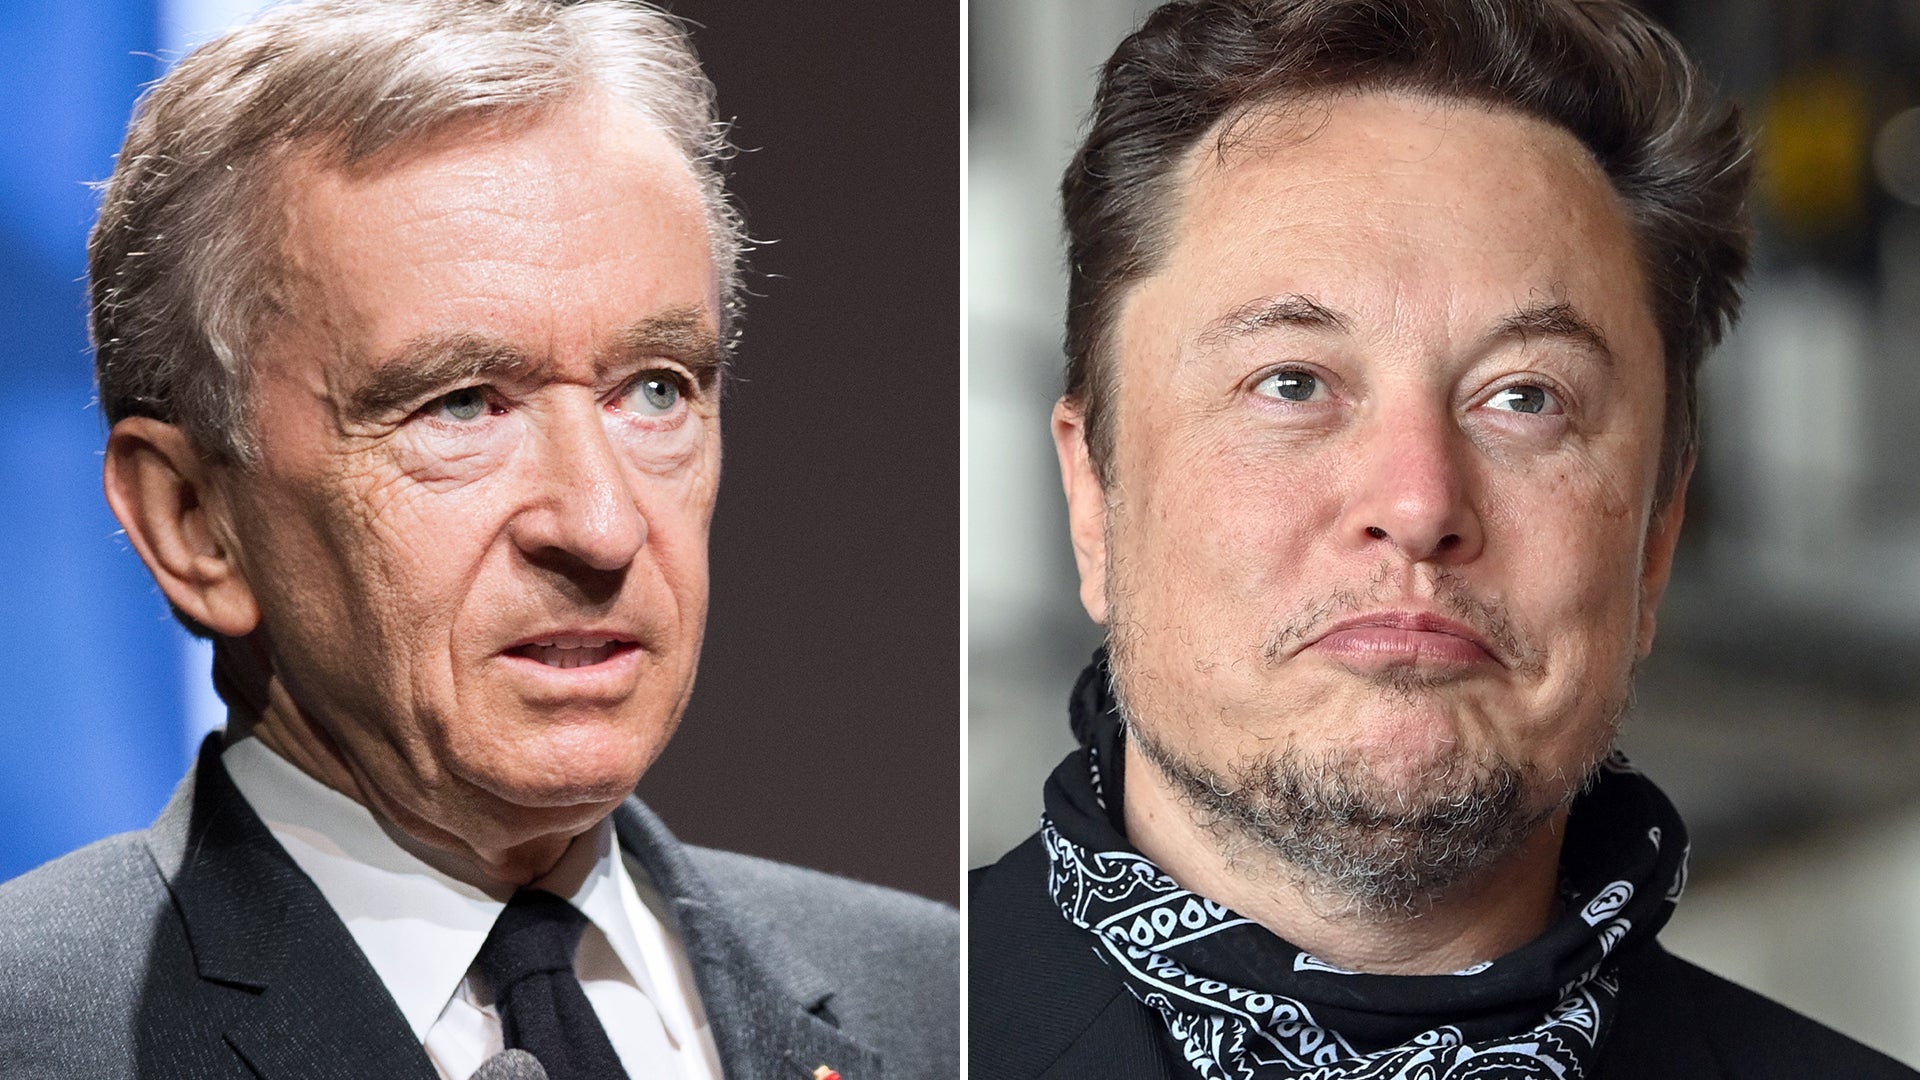 Elon Musk and Bernard Arnault Had the Ultimate Power Lunch in Paris